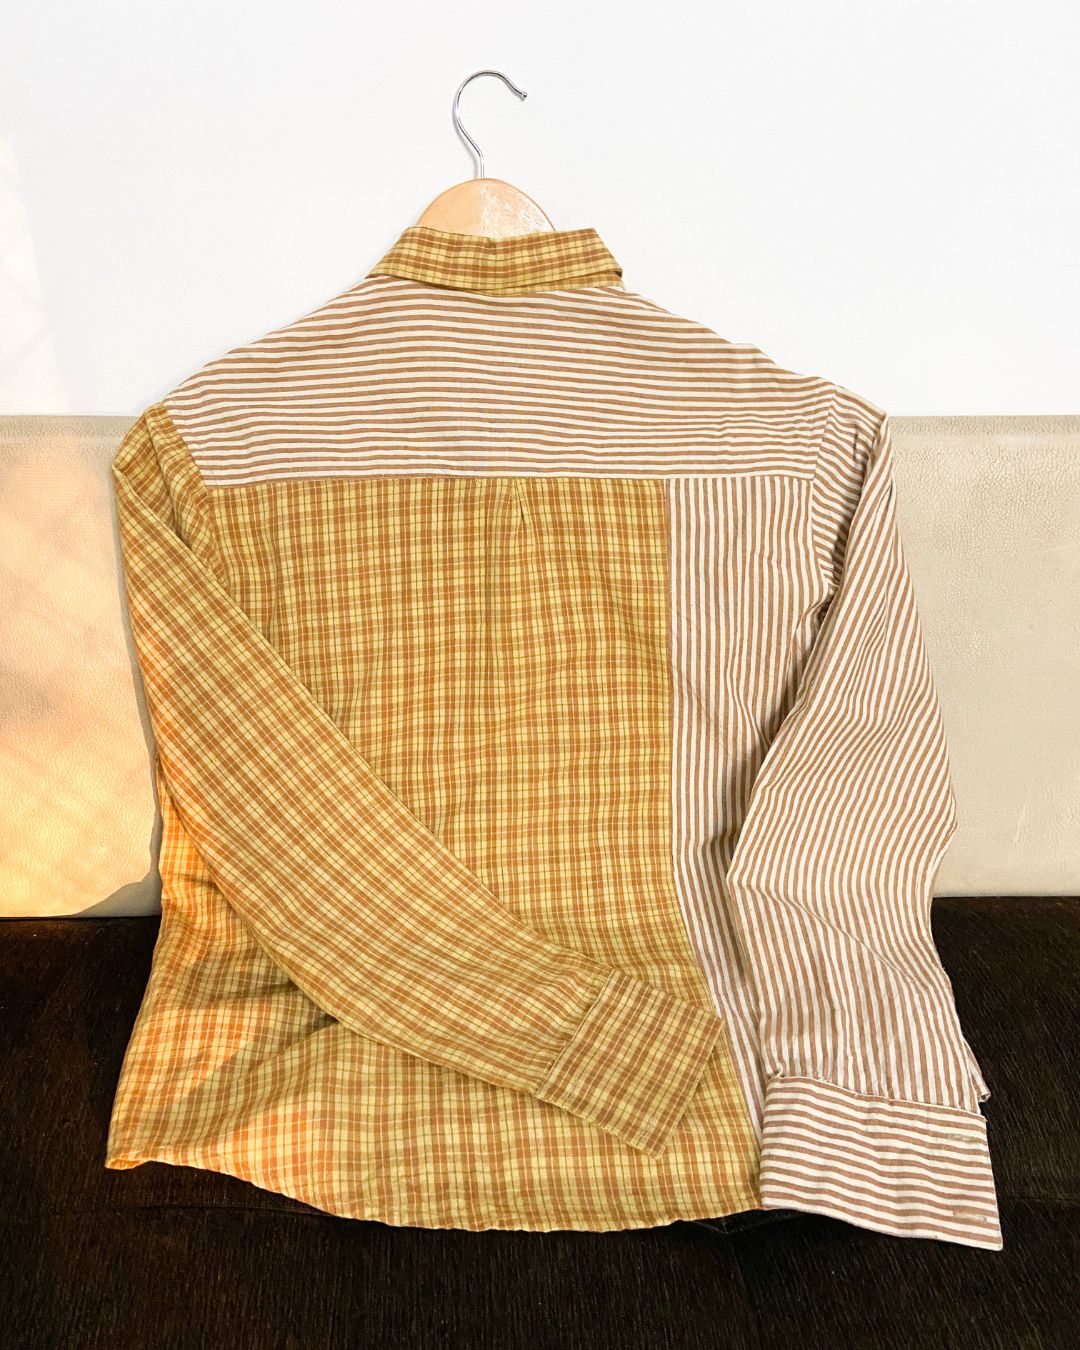 Handwoven checks and striped cotton shirt